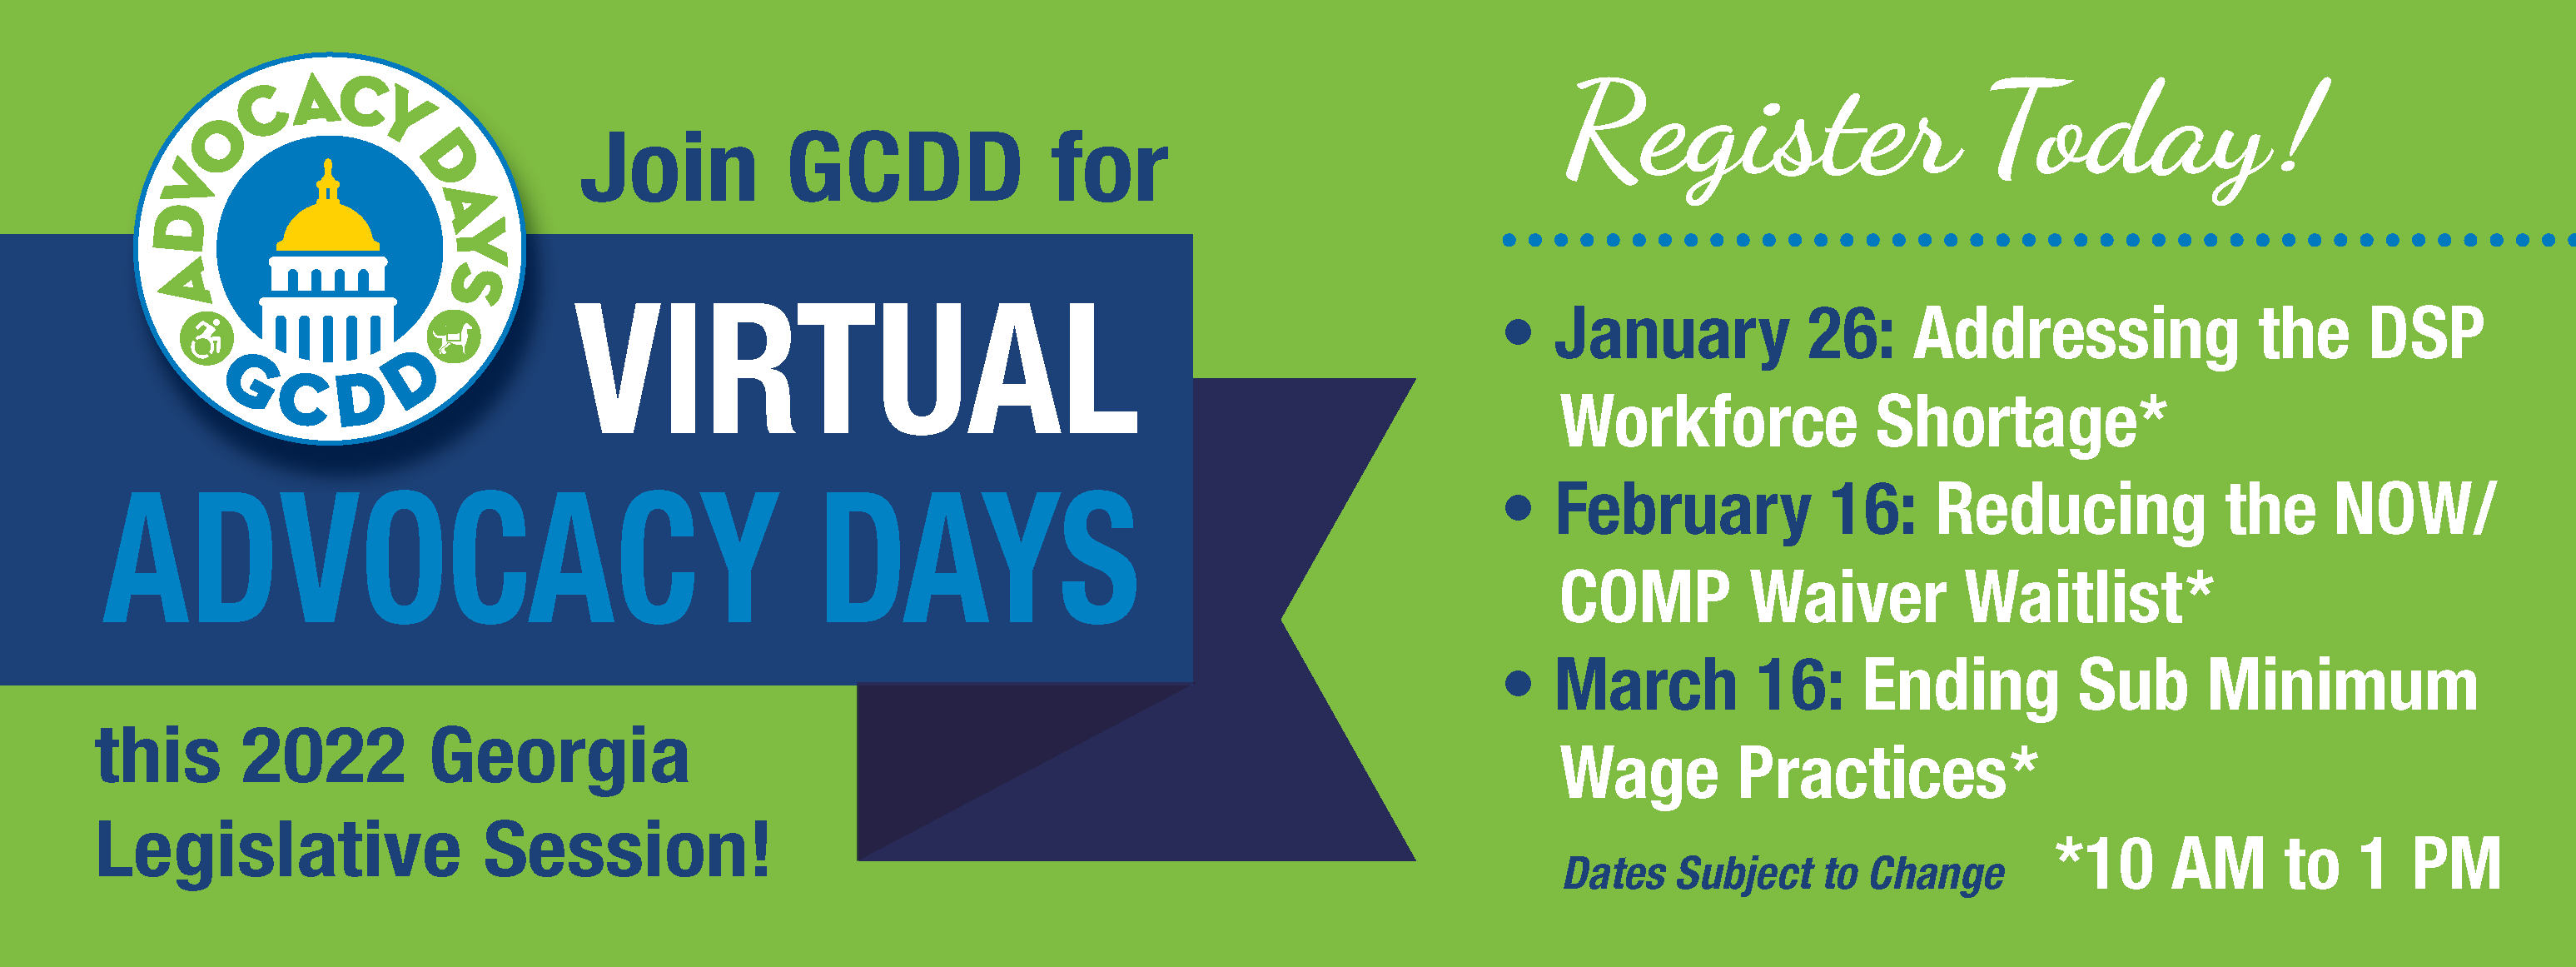 GCDD 2022 Virtual Advocacy Days Register Now!